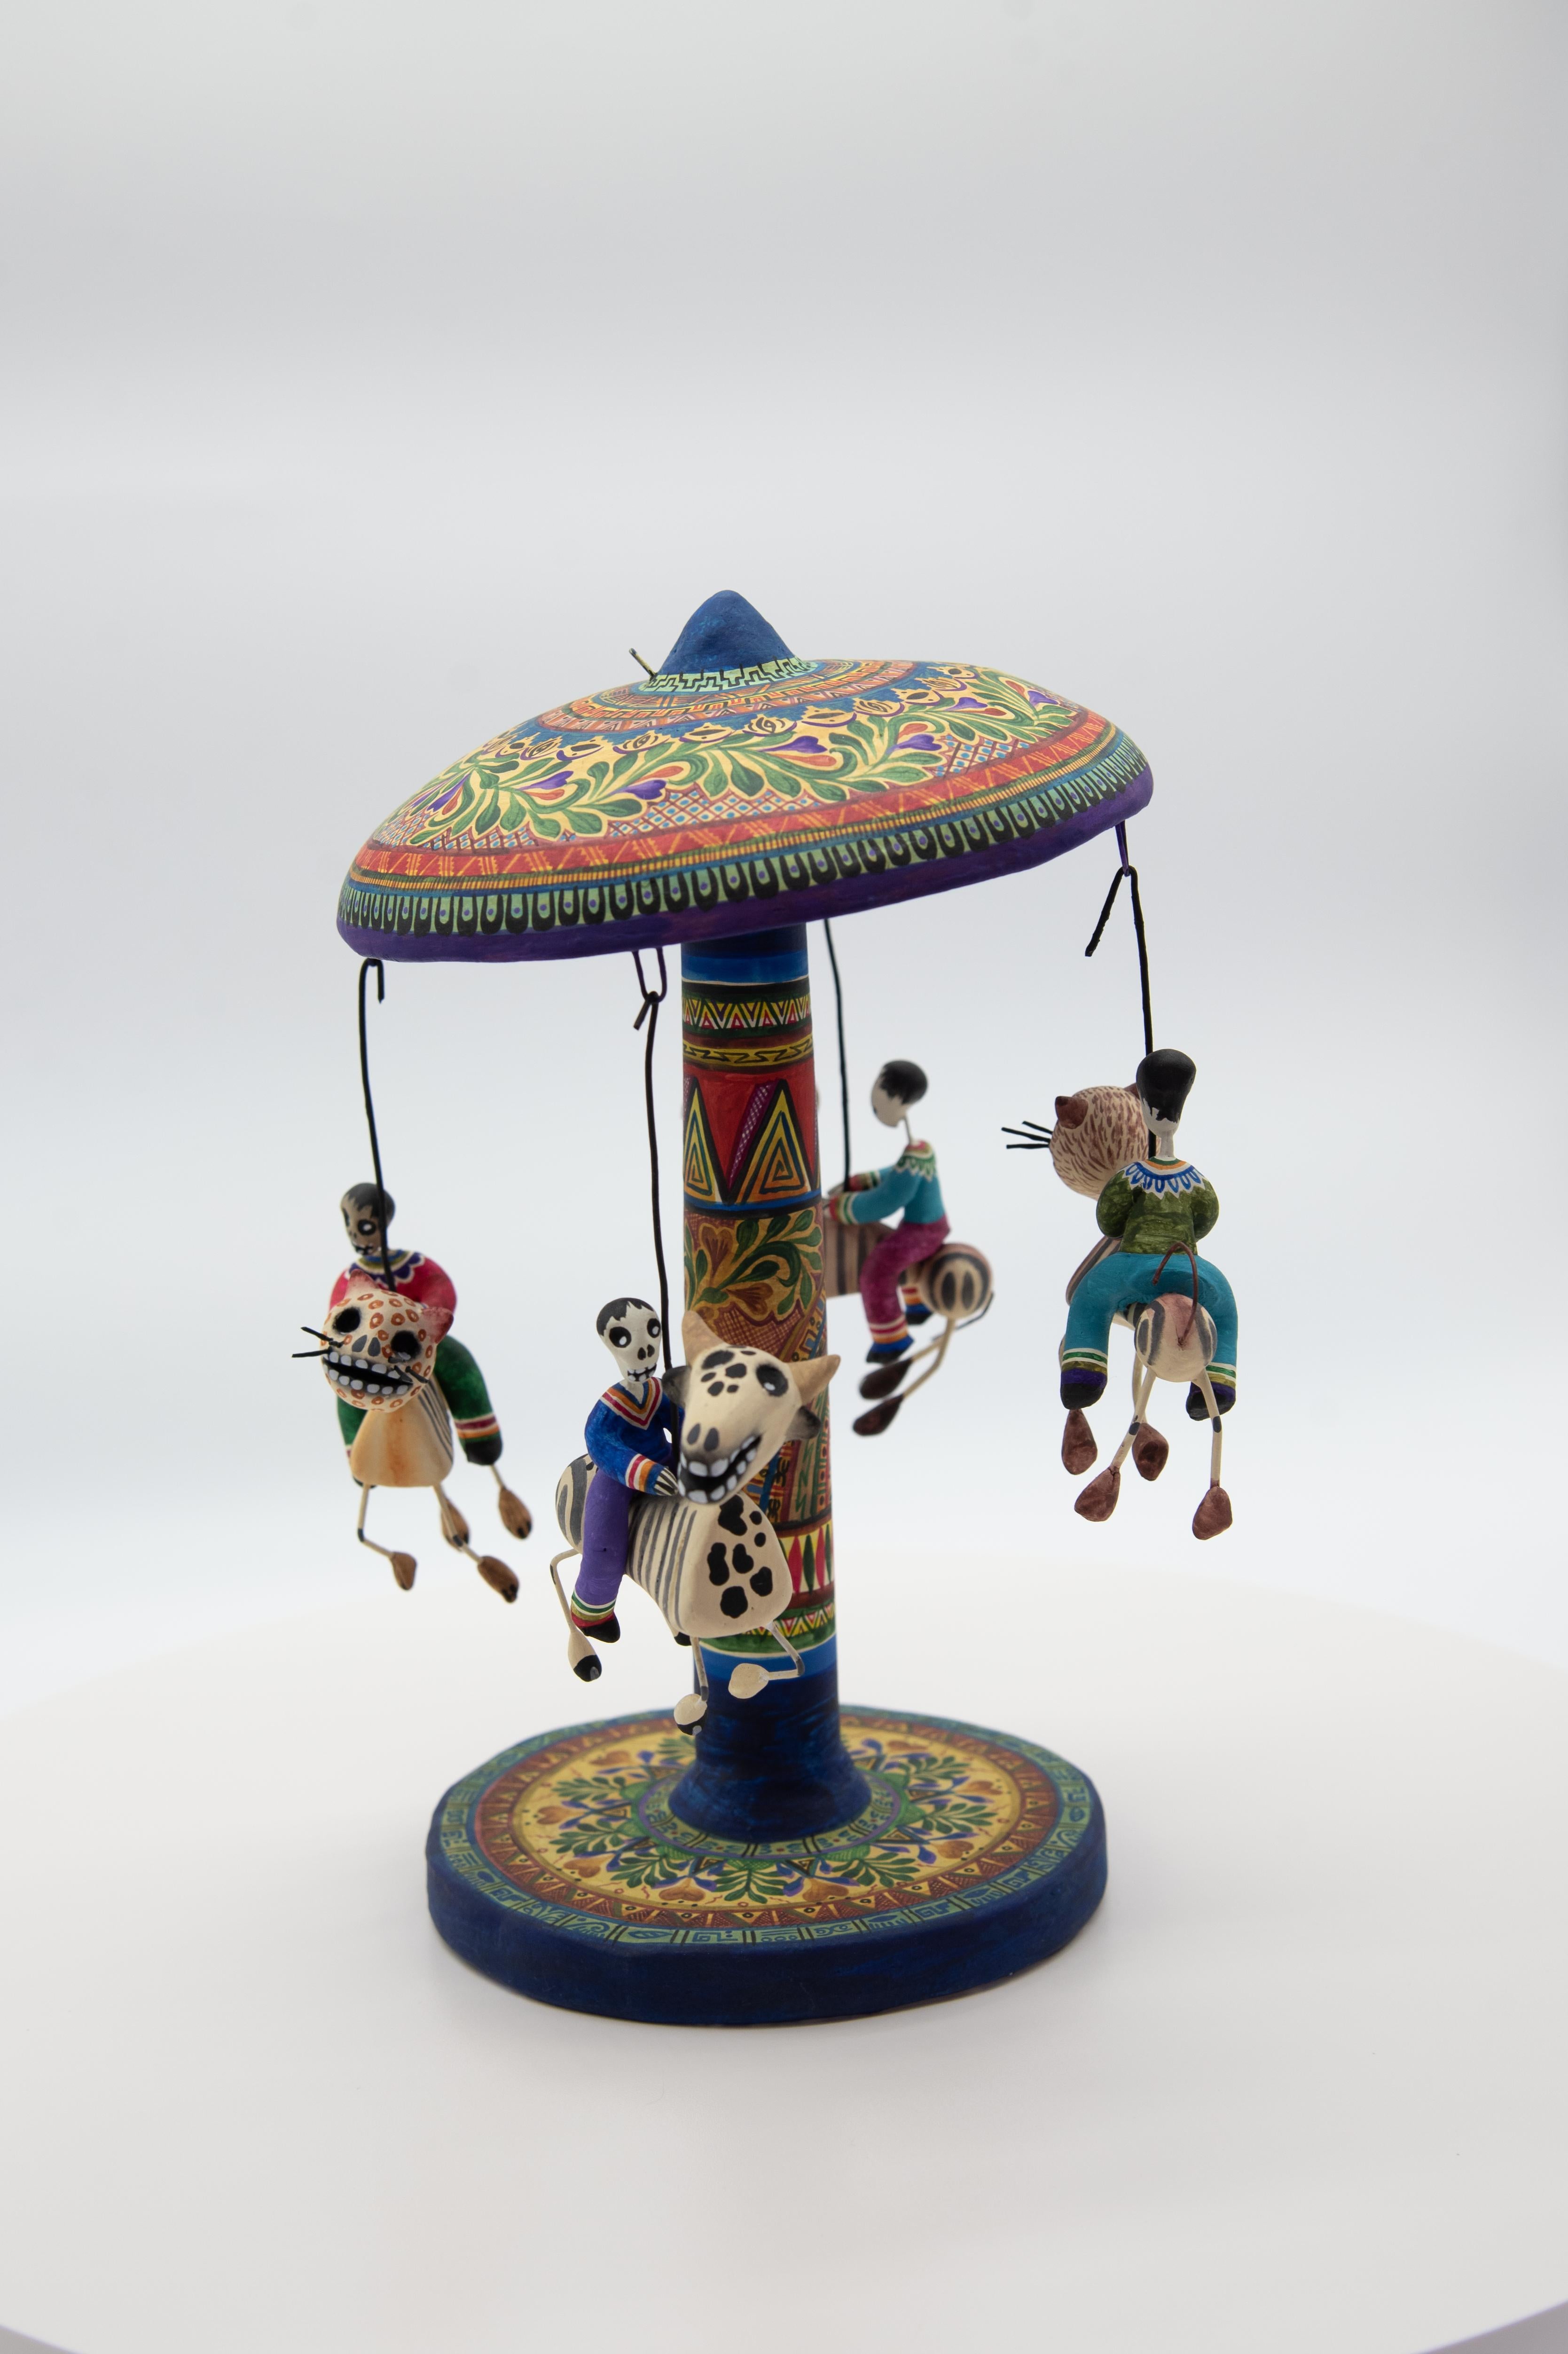 Carousel Day of the Dead Ceramic Mexican Folk Art by Familia Castillo  For Sale 5